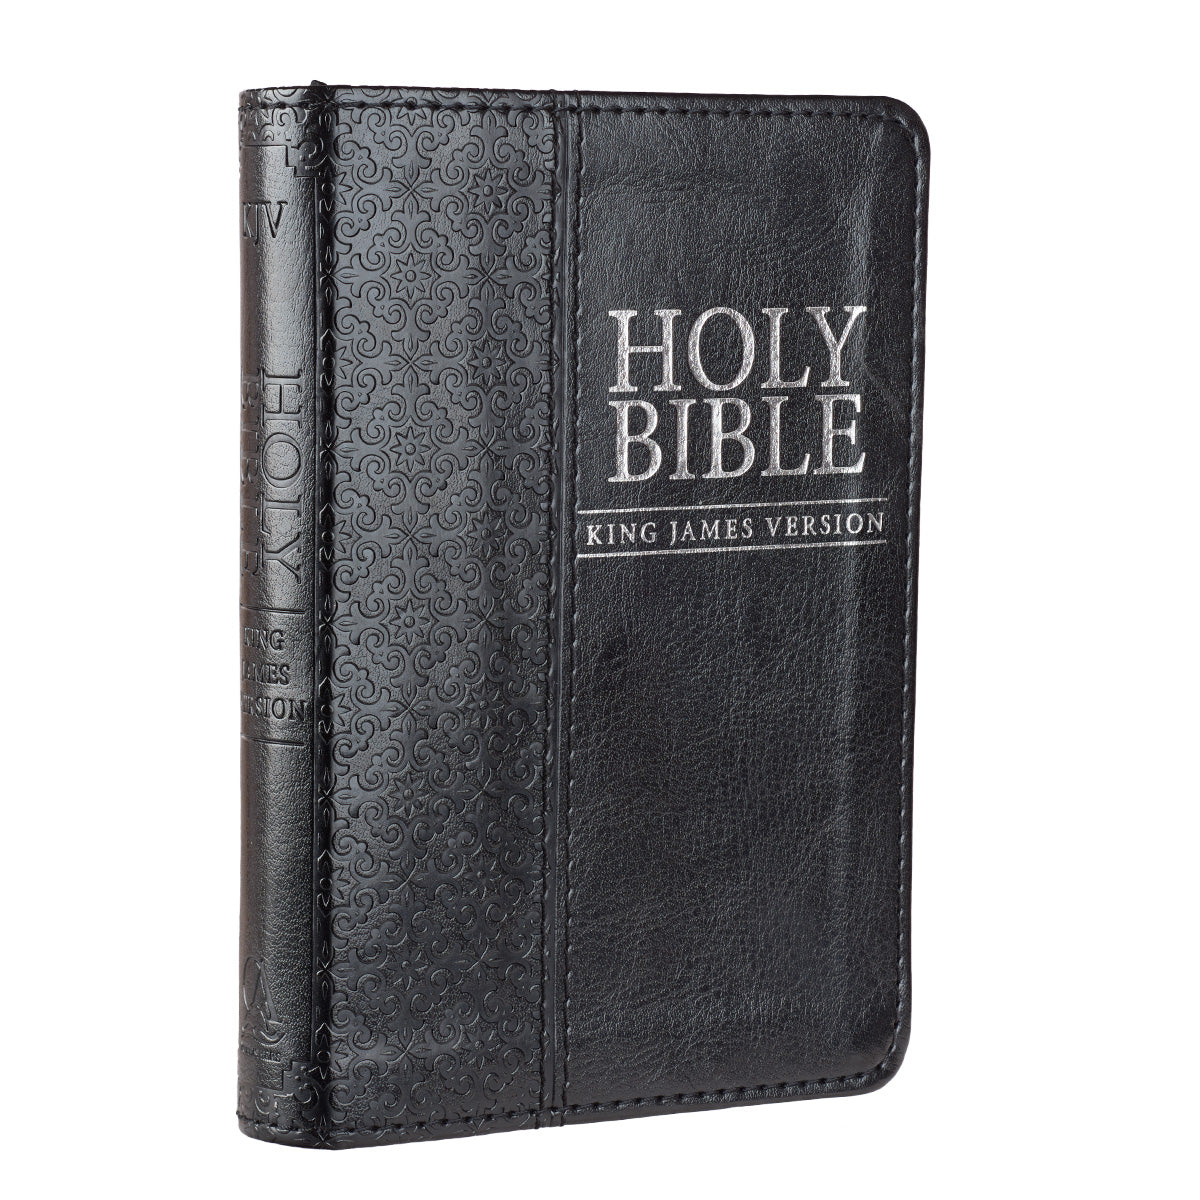 Image of KJV Mini Pocket Bible, Black, Imitation Leather, Ribbon Marker, Verse Finder, One-Year Bible Reading Plan, Presentation Page other